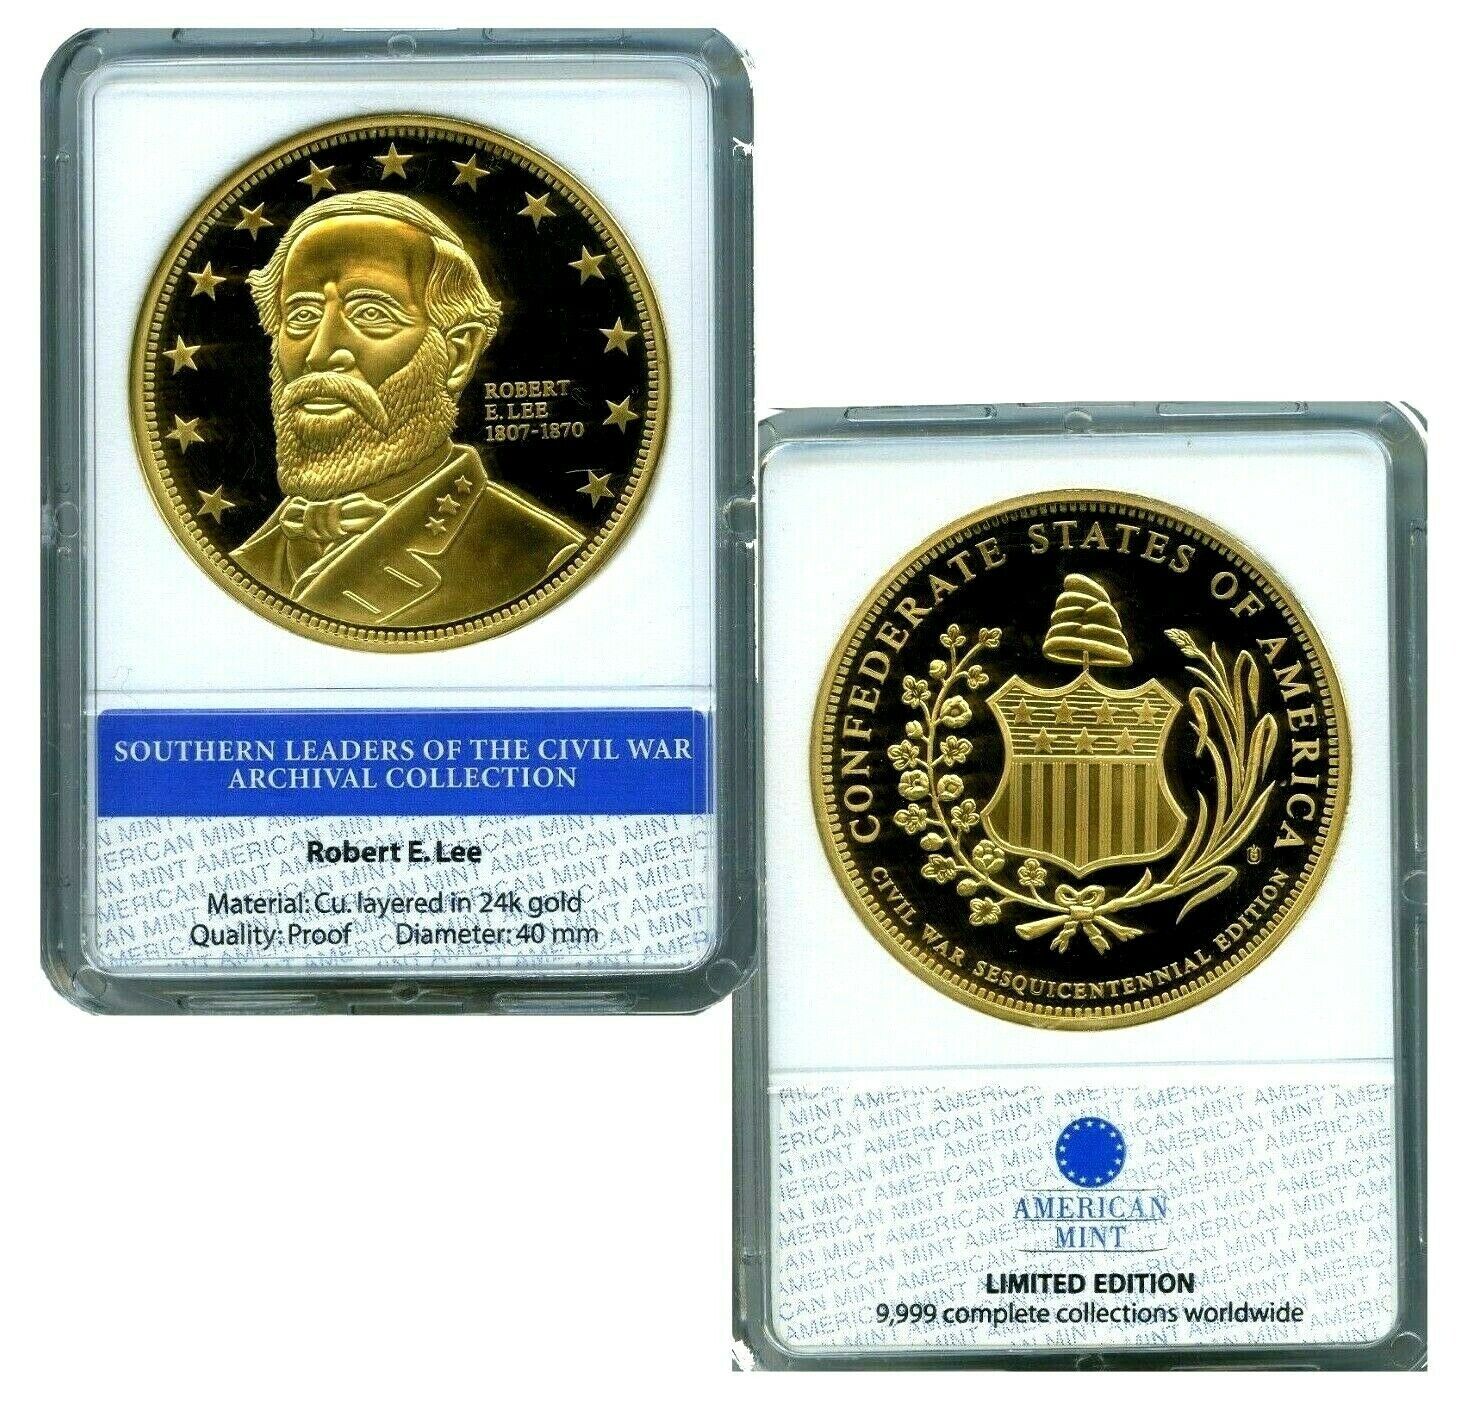 ROBERT E LEE CIVIL WAR COMMEMORATIVE COIN PROOF LUCKY MONEY VALUE $99.95